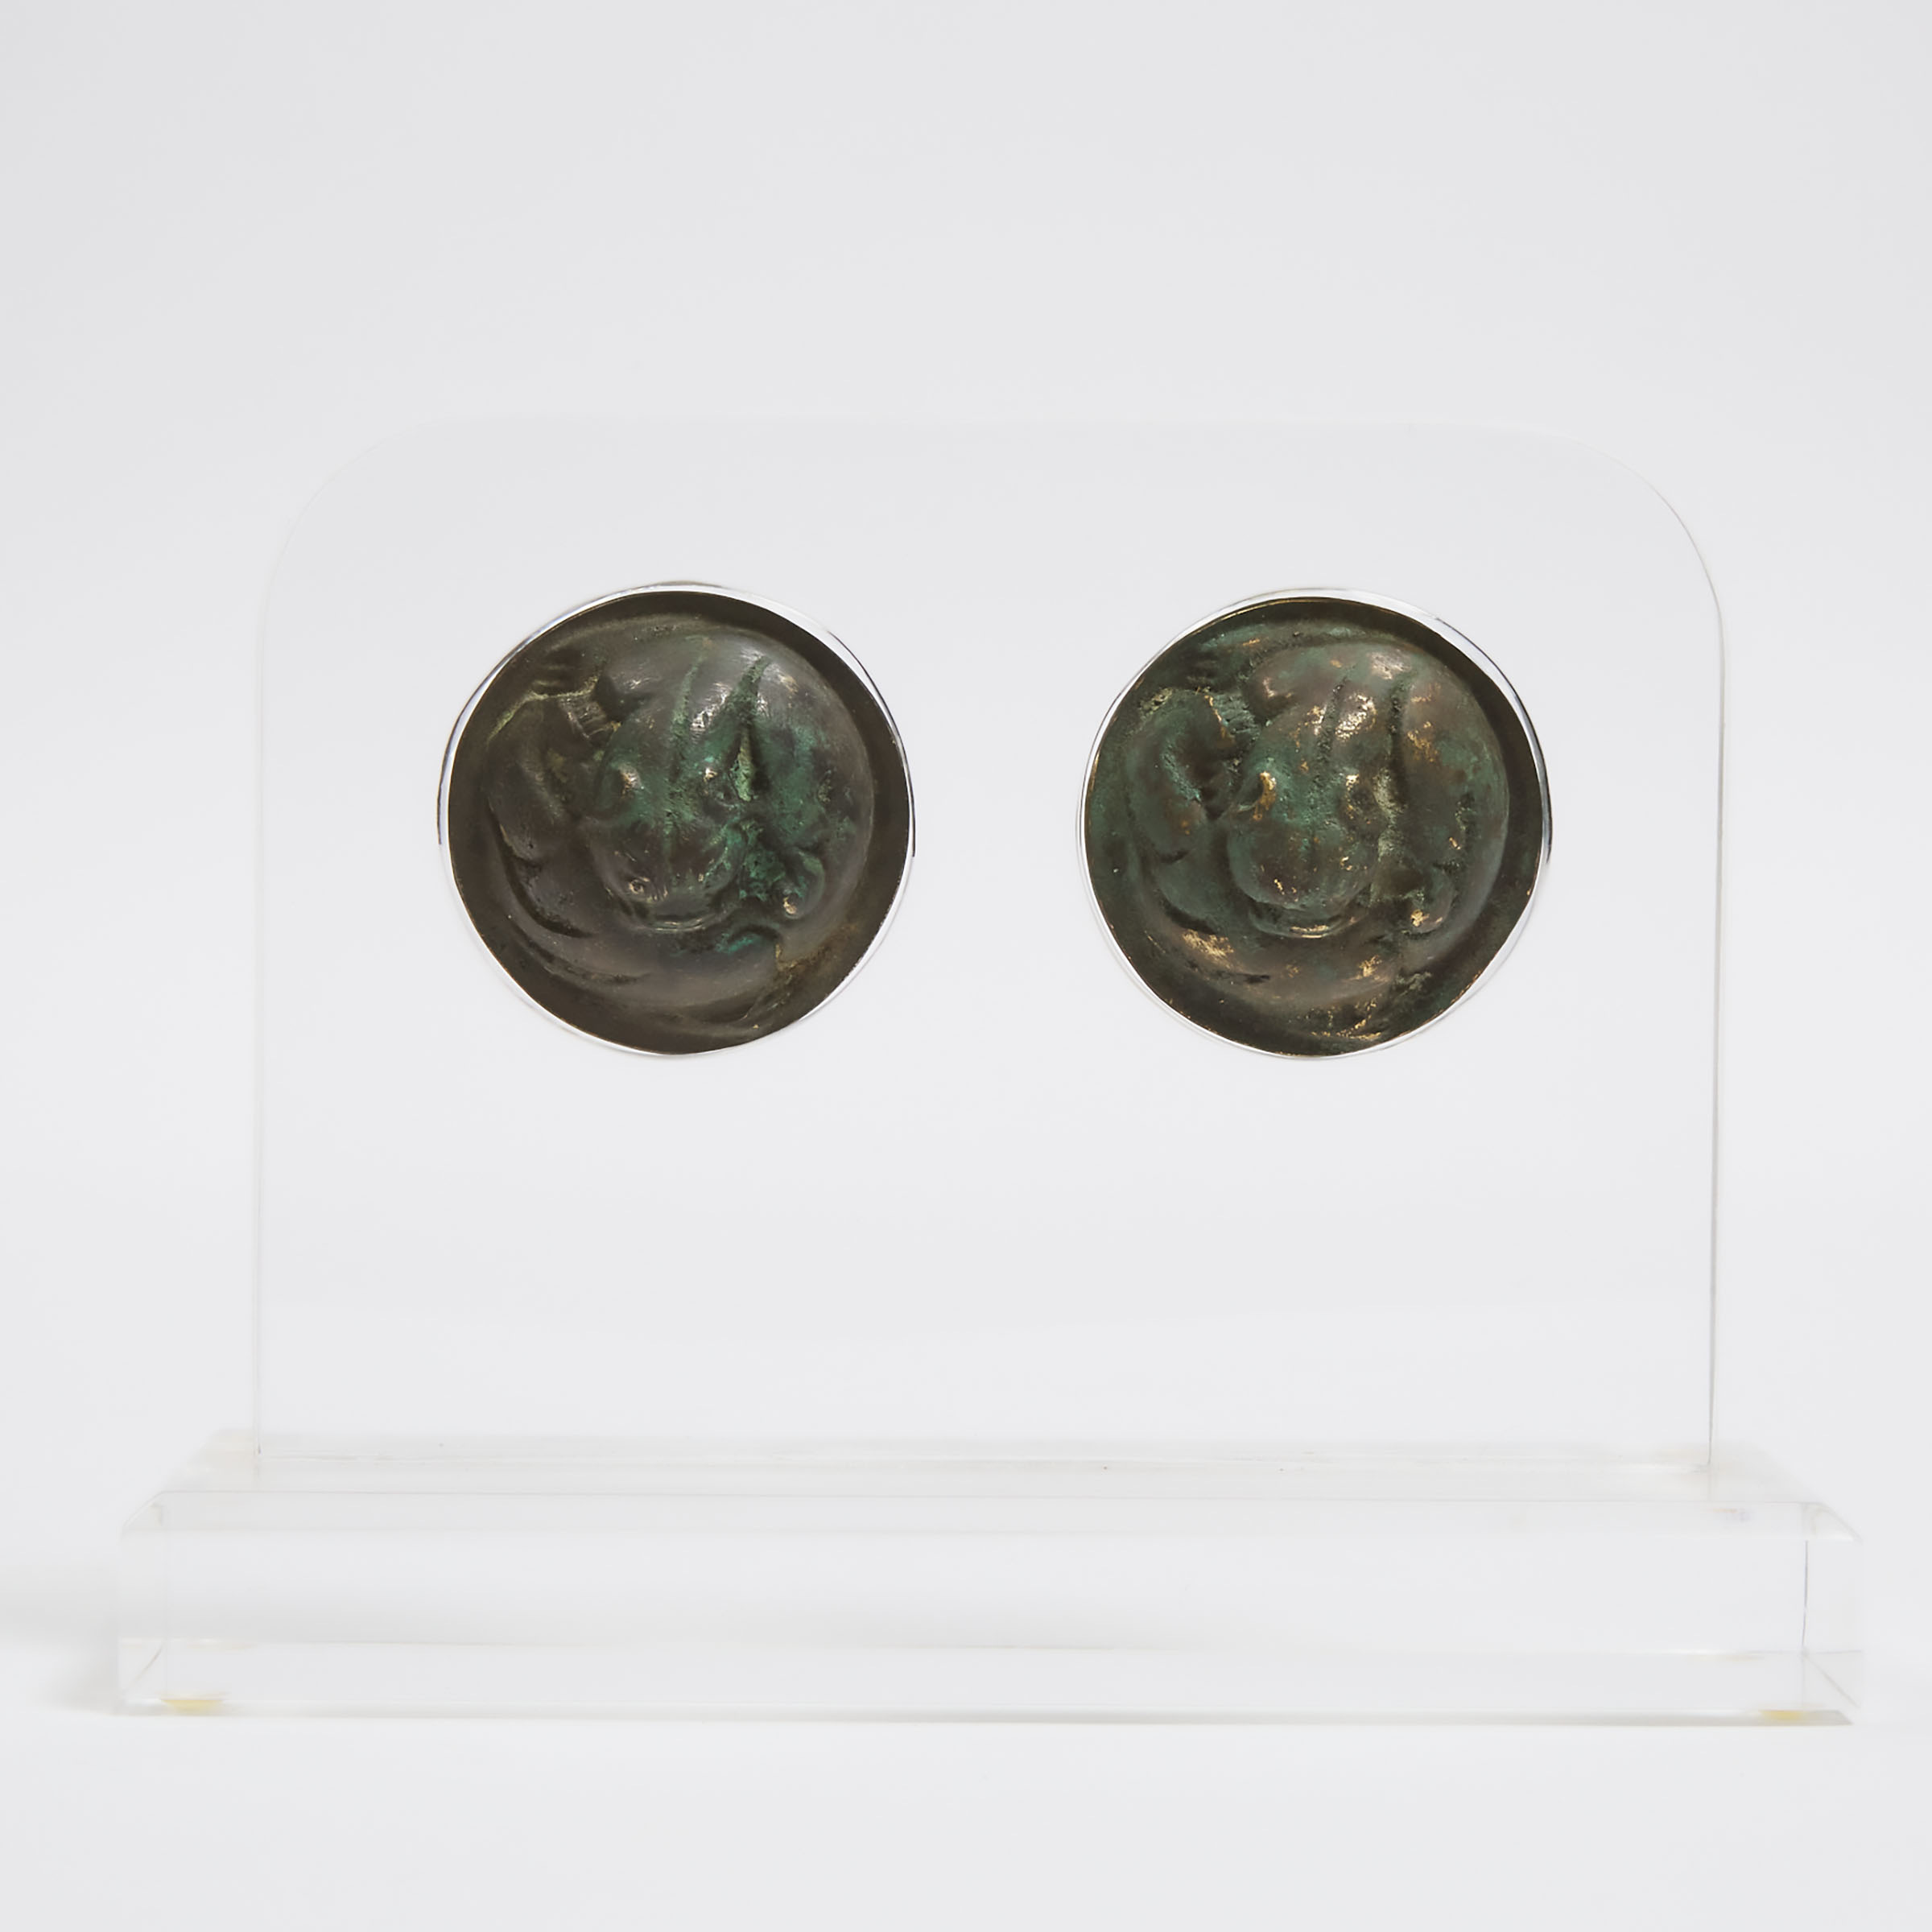 A Pair of Bronze Circular Mat Weights, Han Dynasty